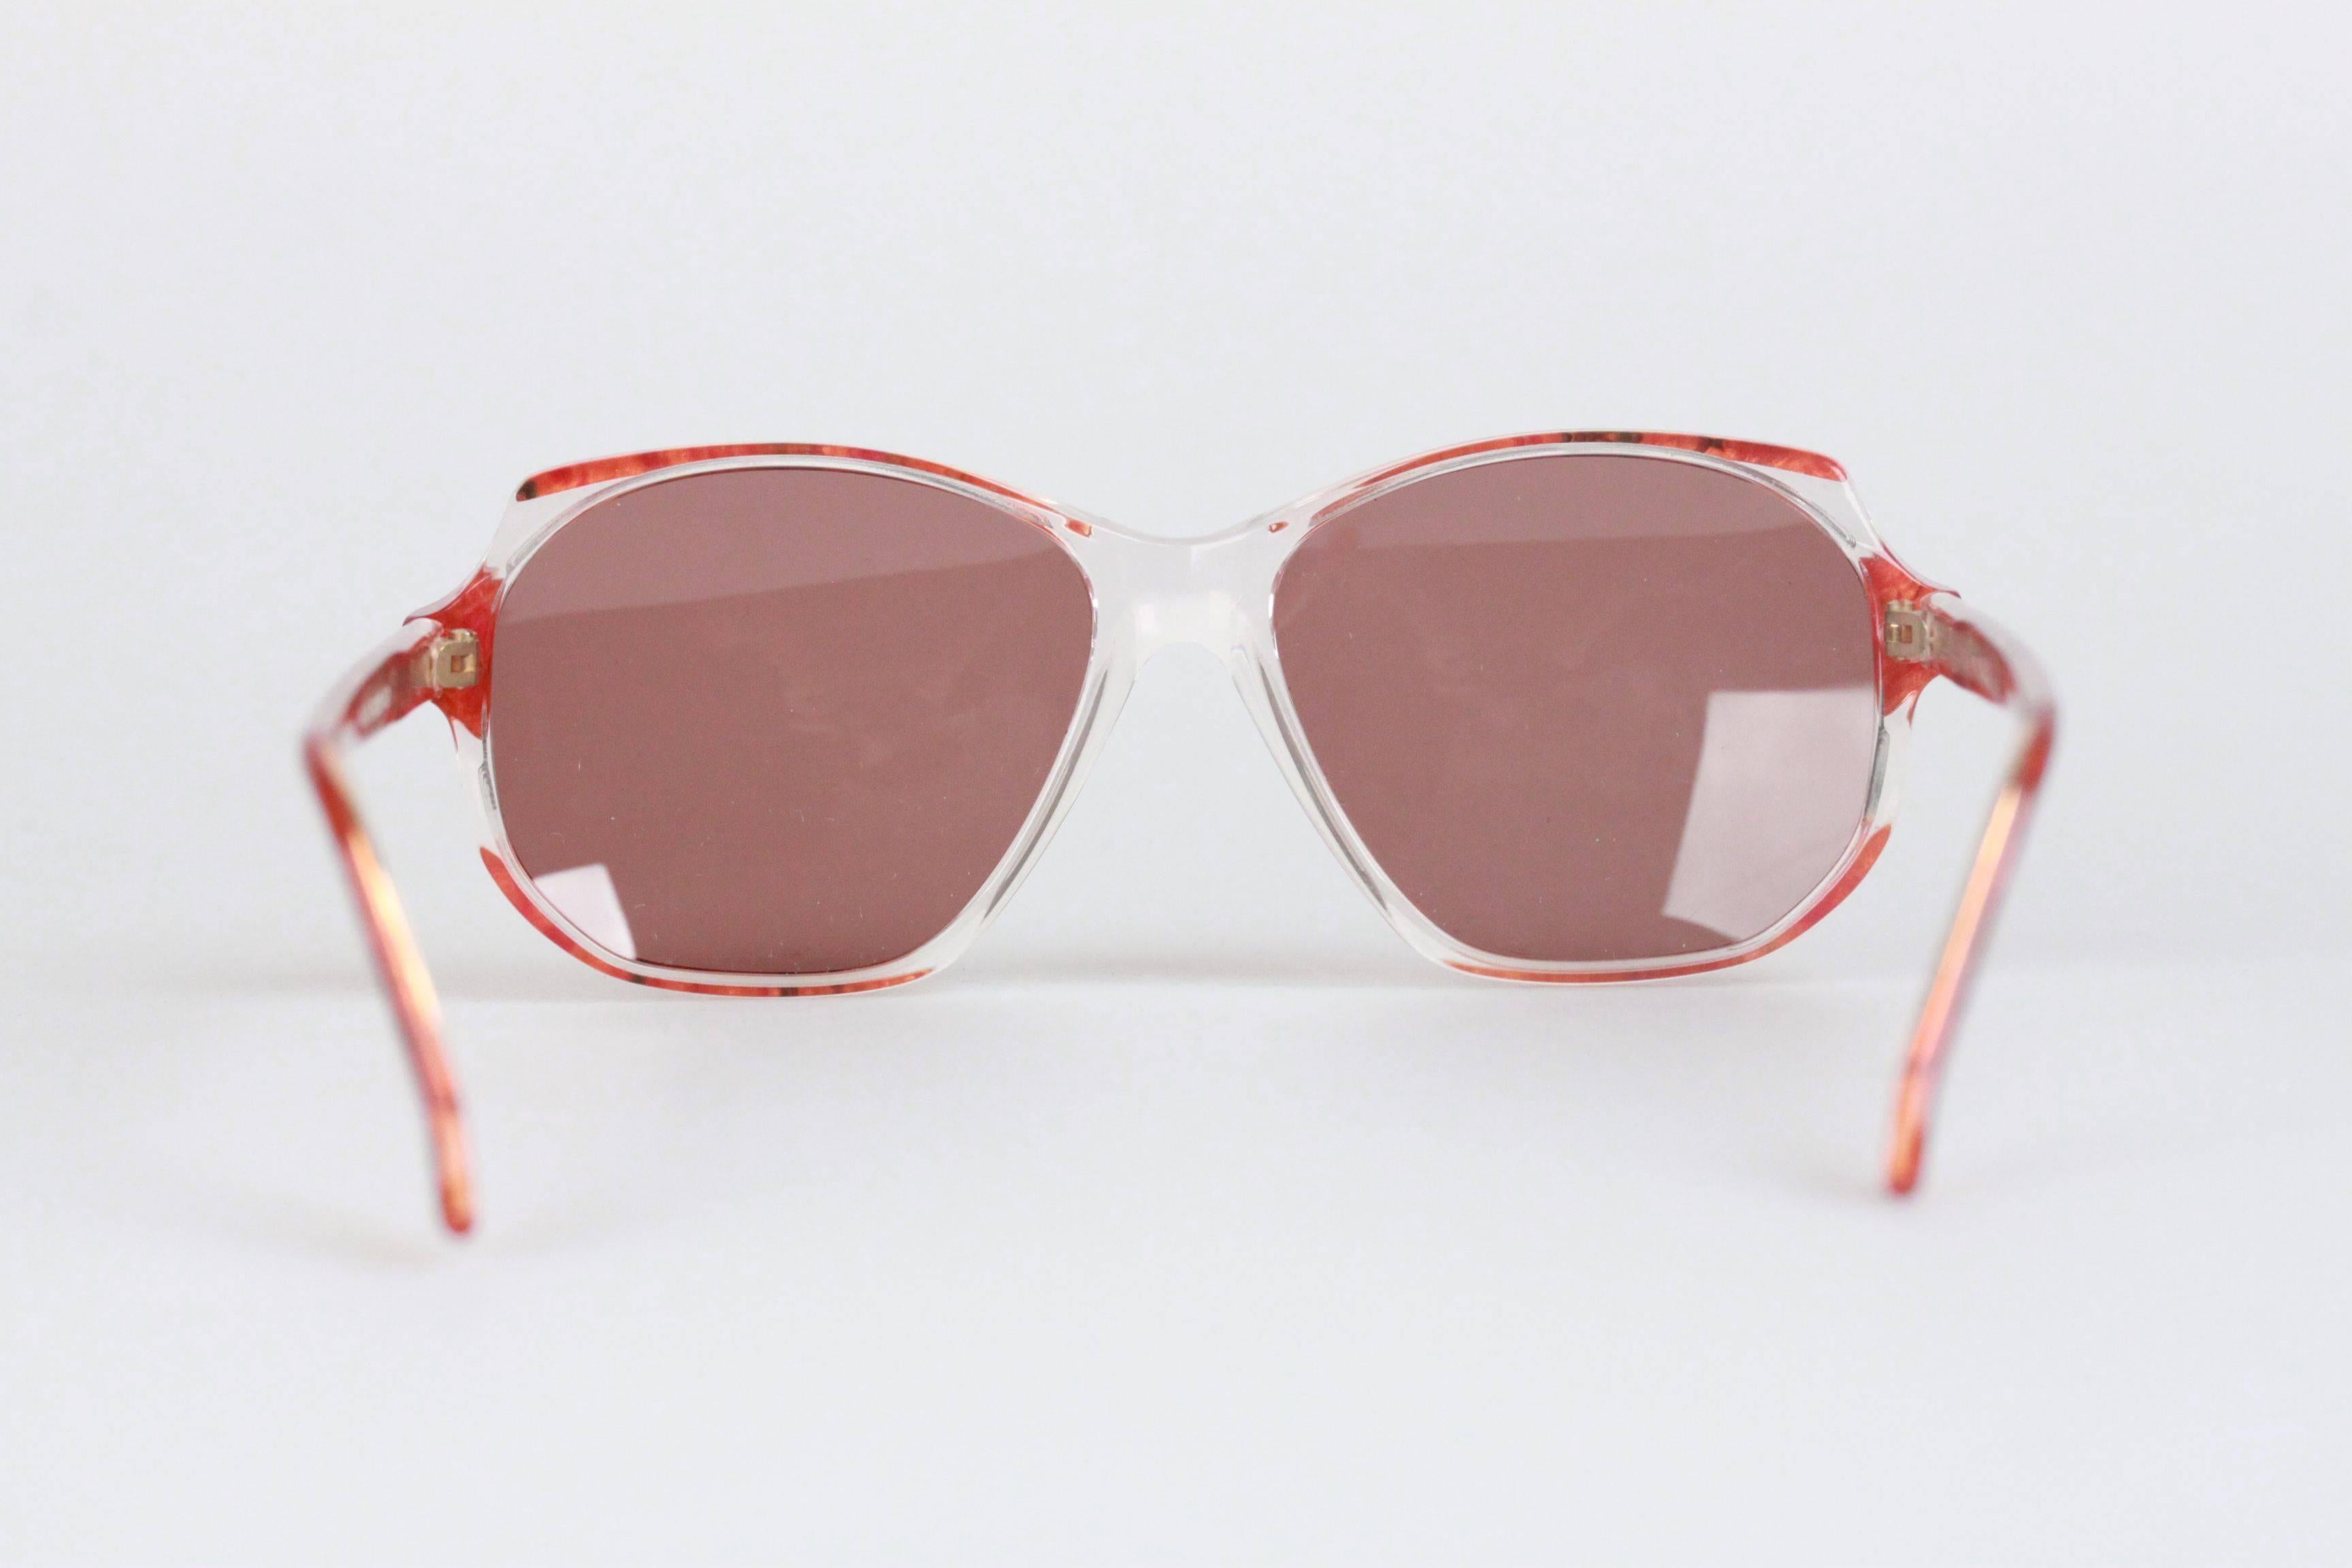 YVES SAINT LAURENT Vintage Marbled RED MINT Sunglasses NAXOS 825 56mm 1